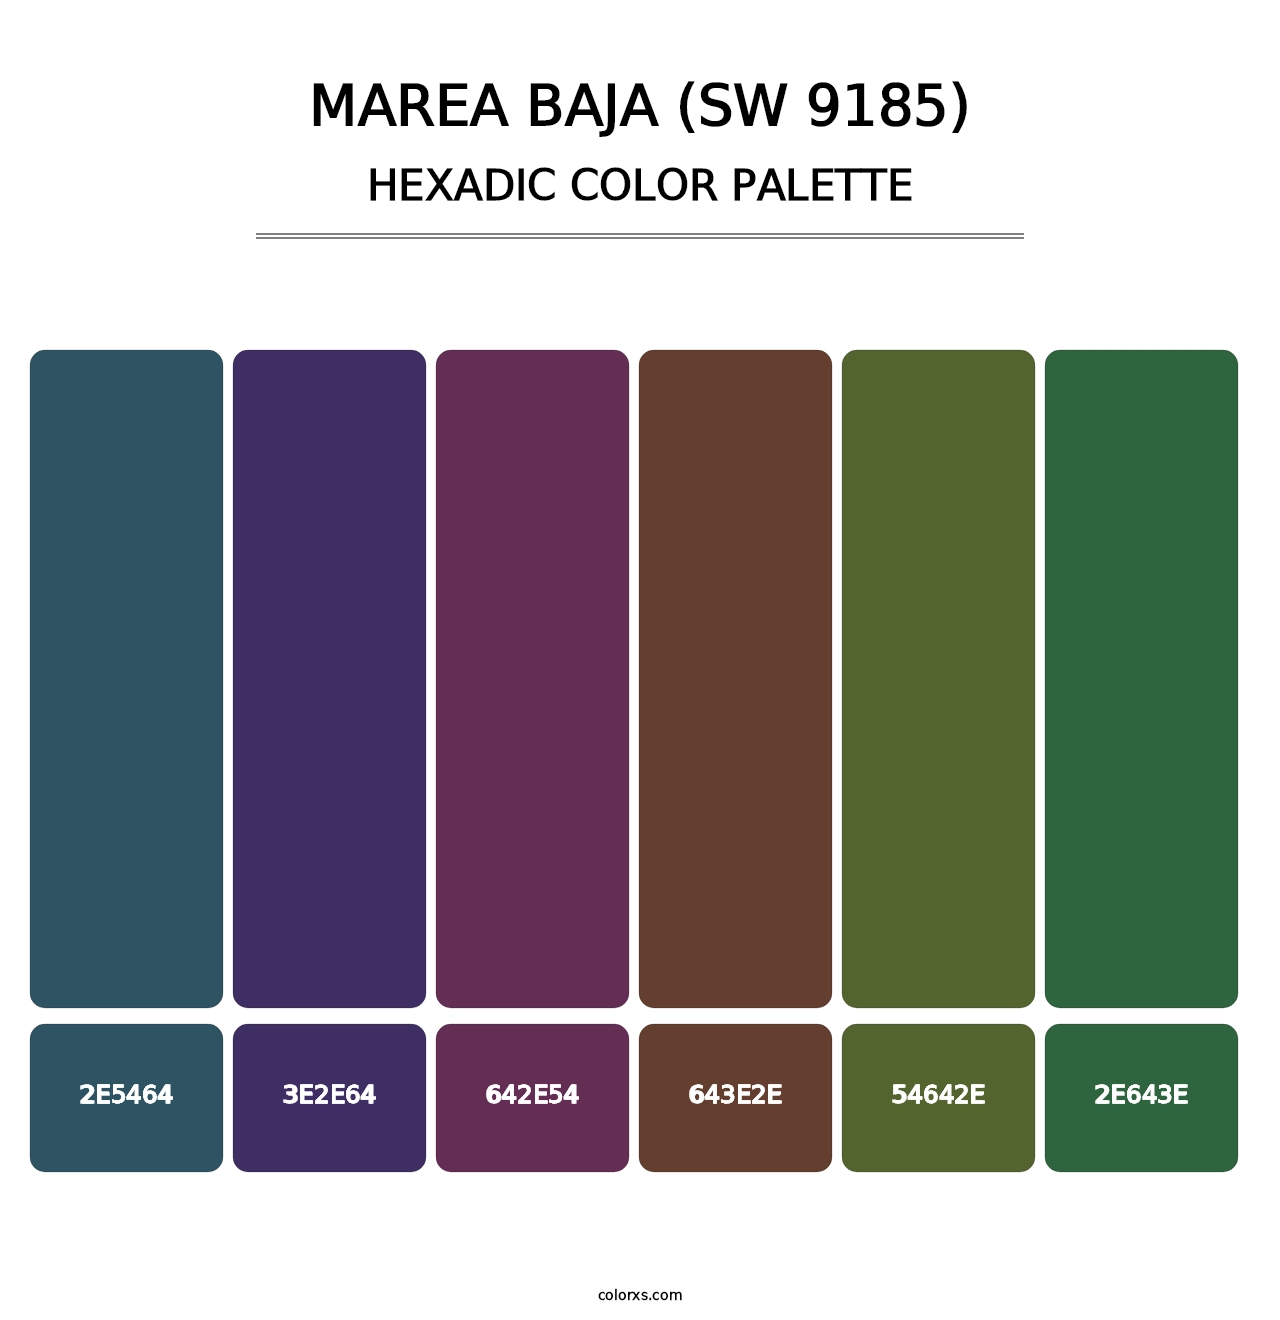 Marea Baja (SW 9185) - Hexadic Color Palette